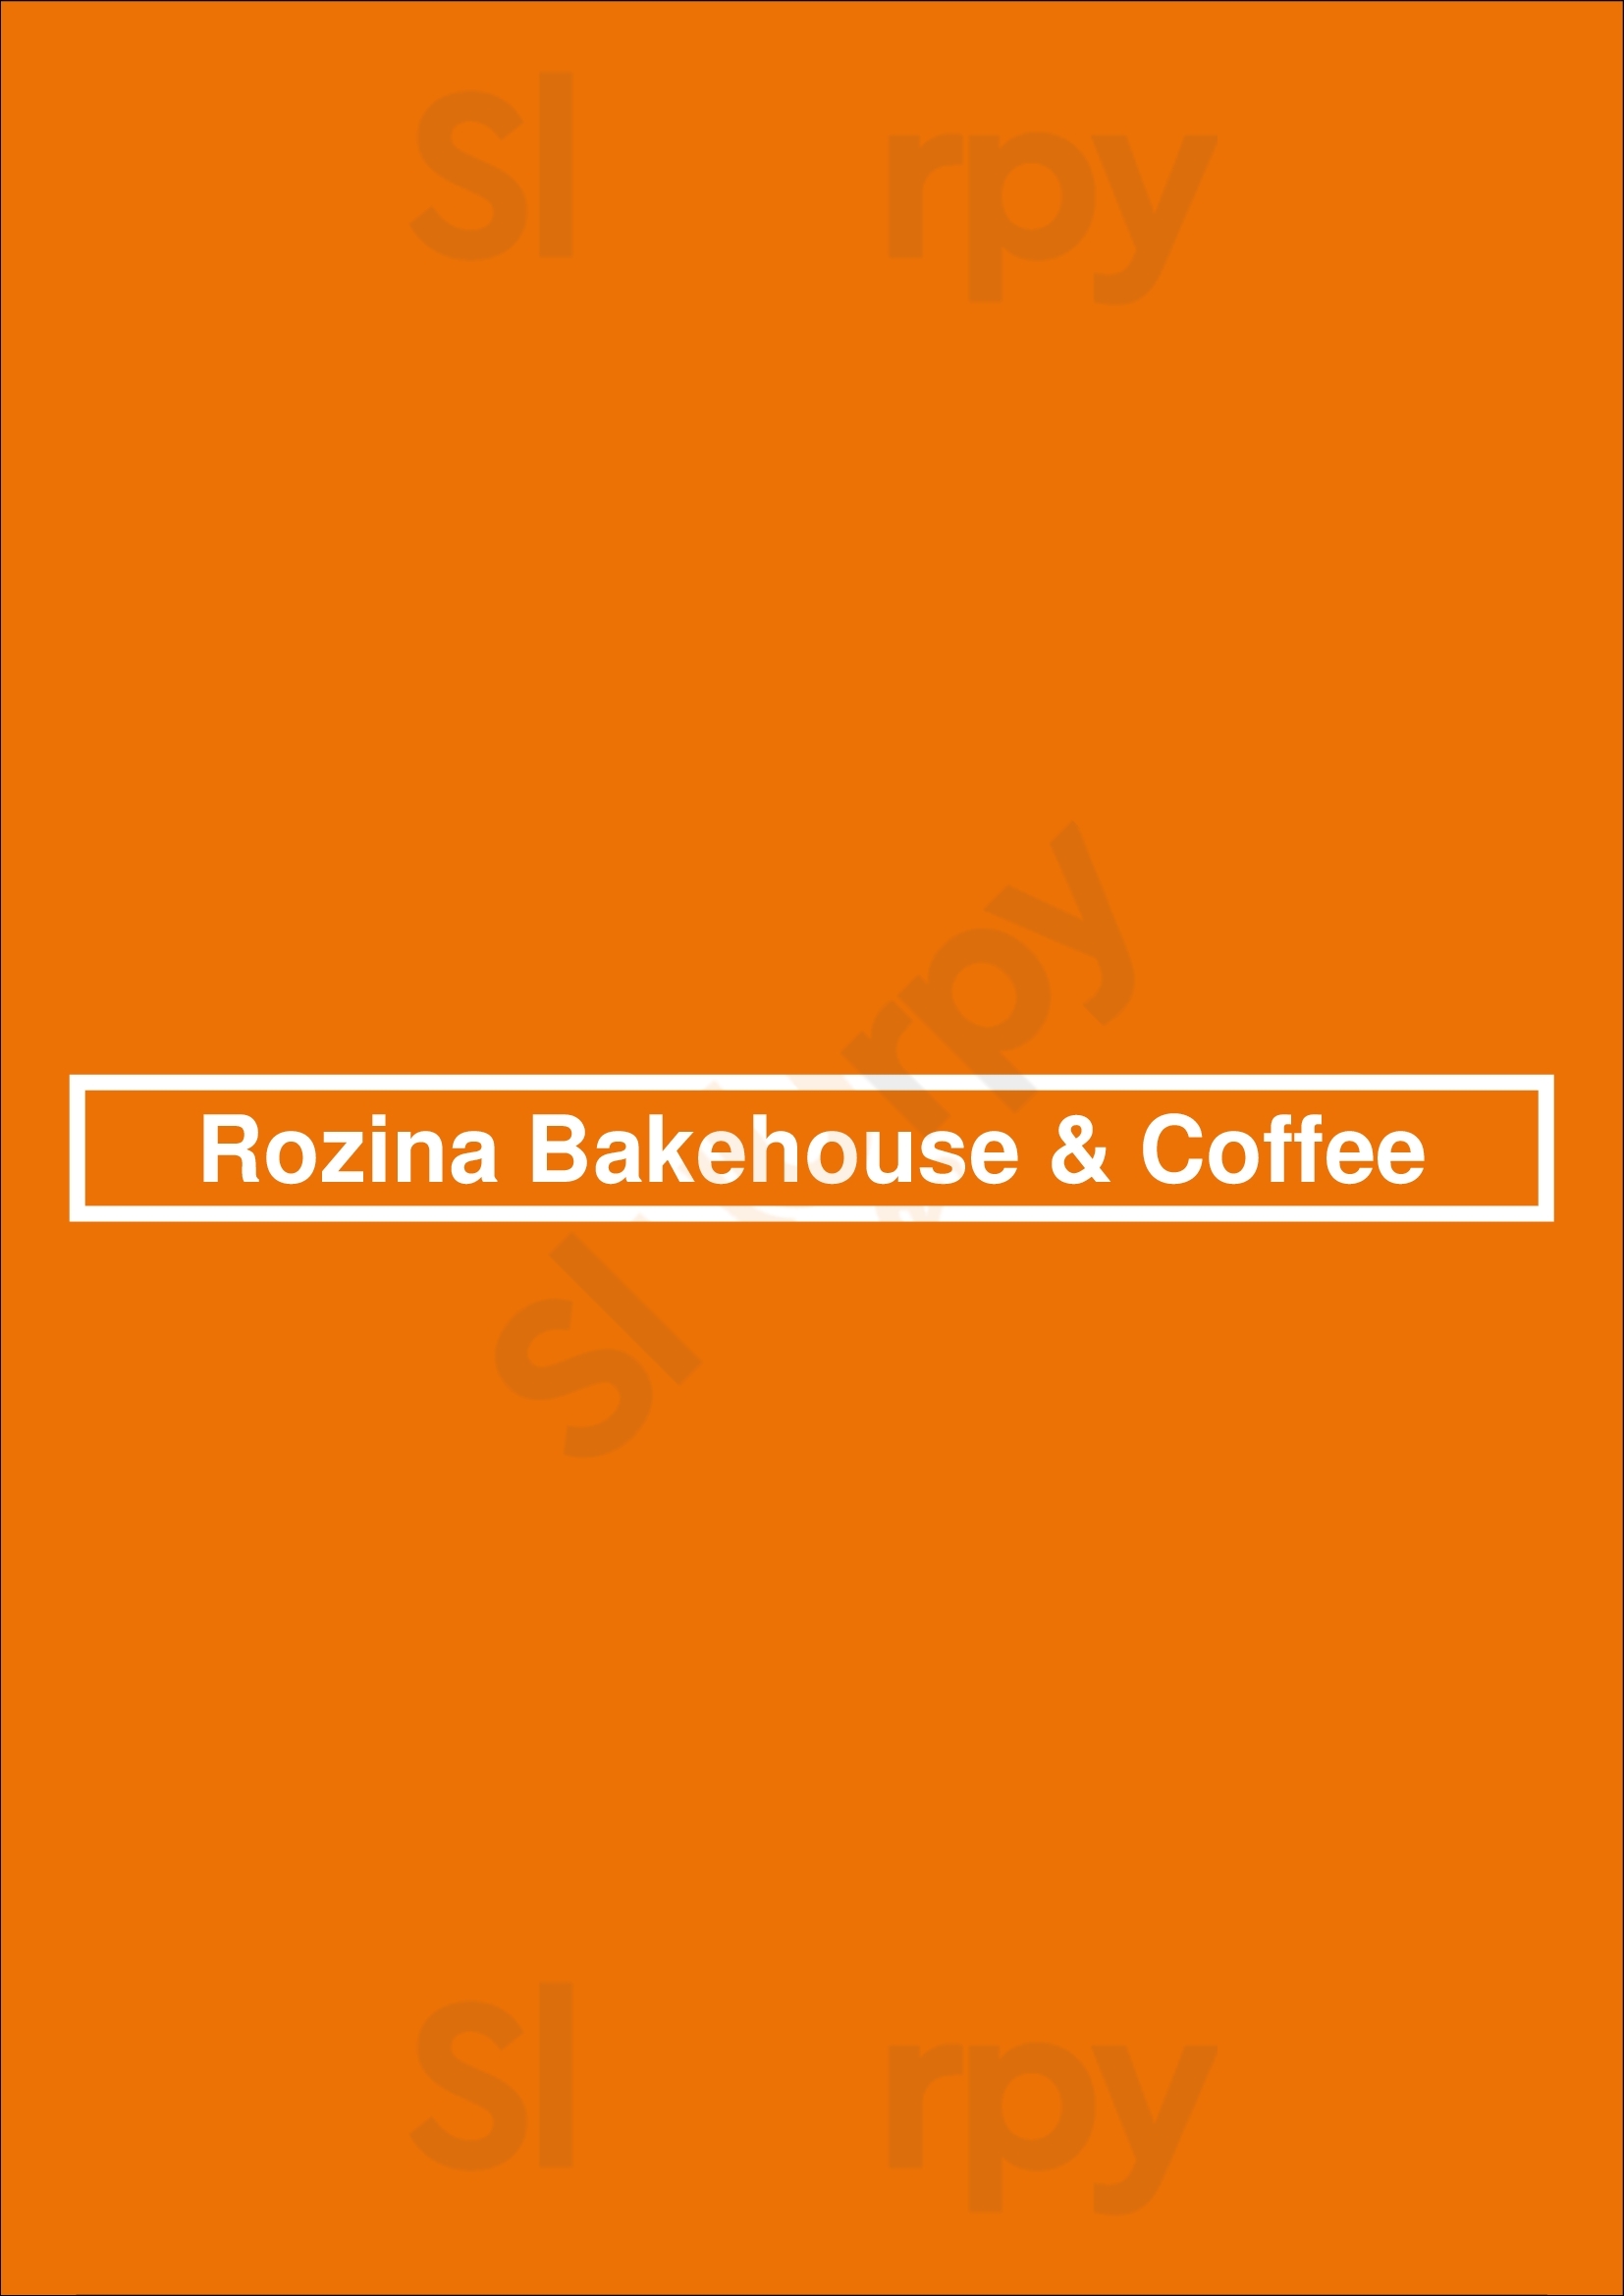 Rozina Bakehouse & Coffee Atlanta Menu - 1